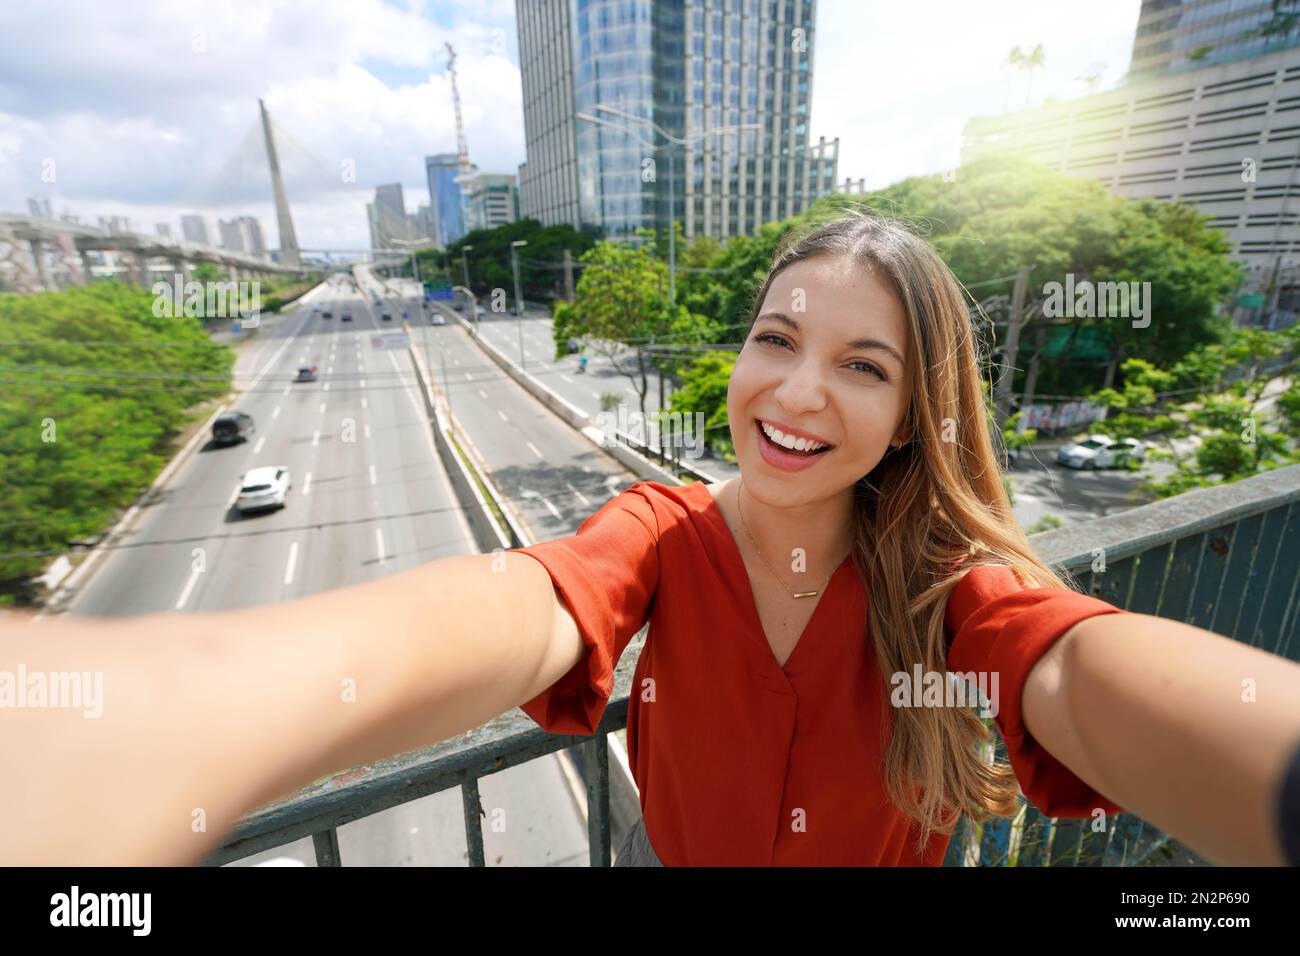 Tourism in Sao Paulo. Beautiful smiling girl takes self portrait with Ponte Estaiada bridge in Sao Paulo metropolis, Brazil. Stock Photo